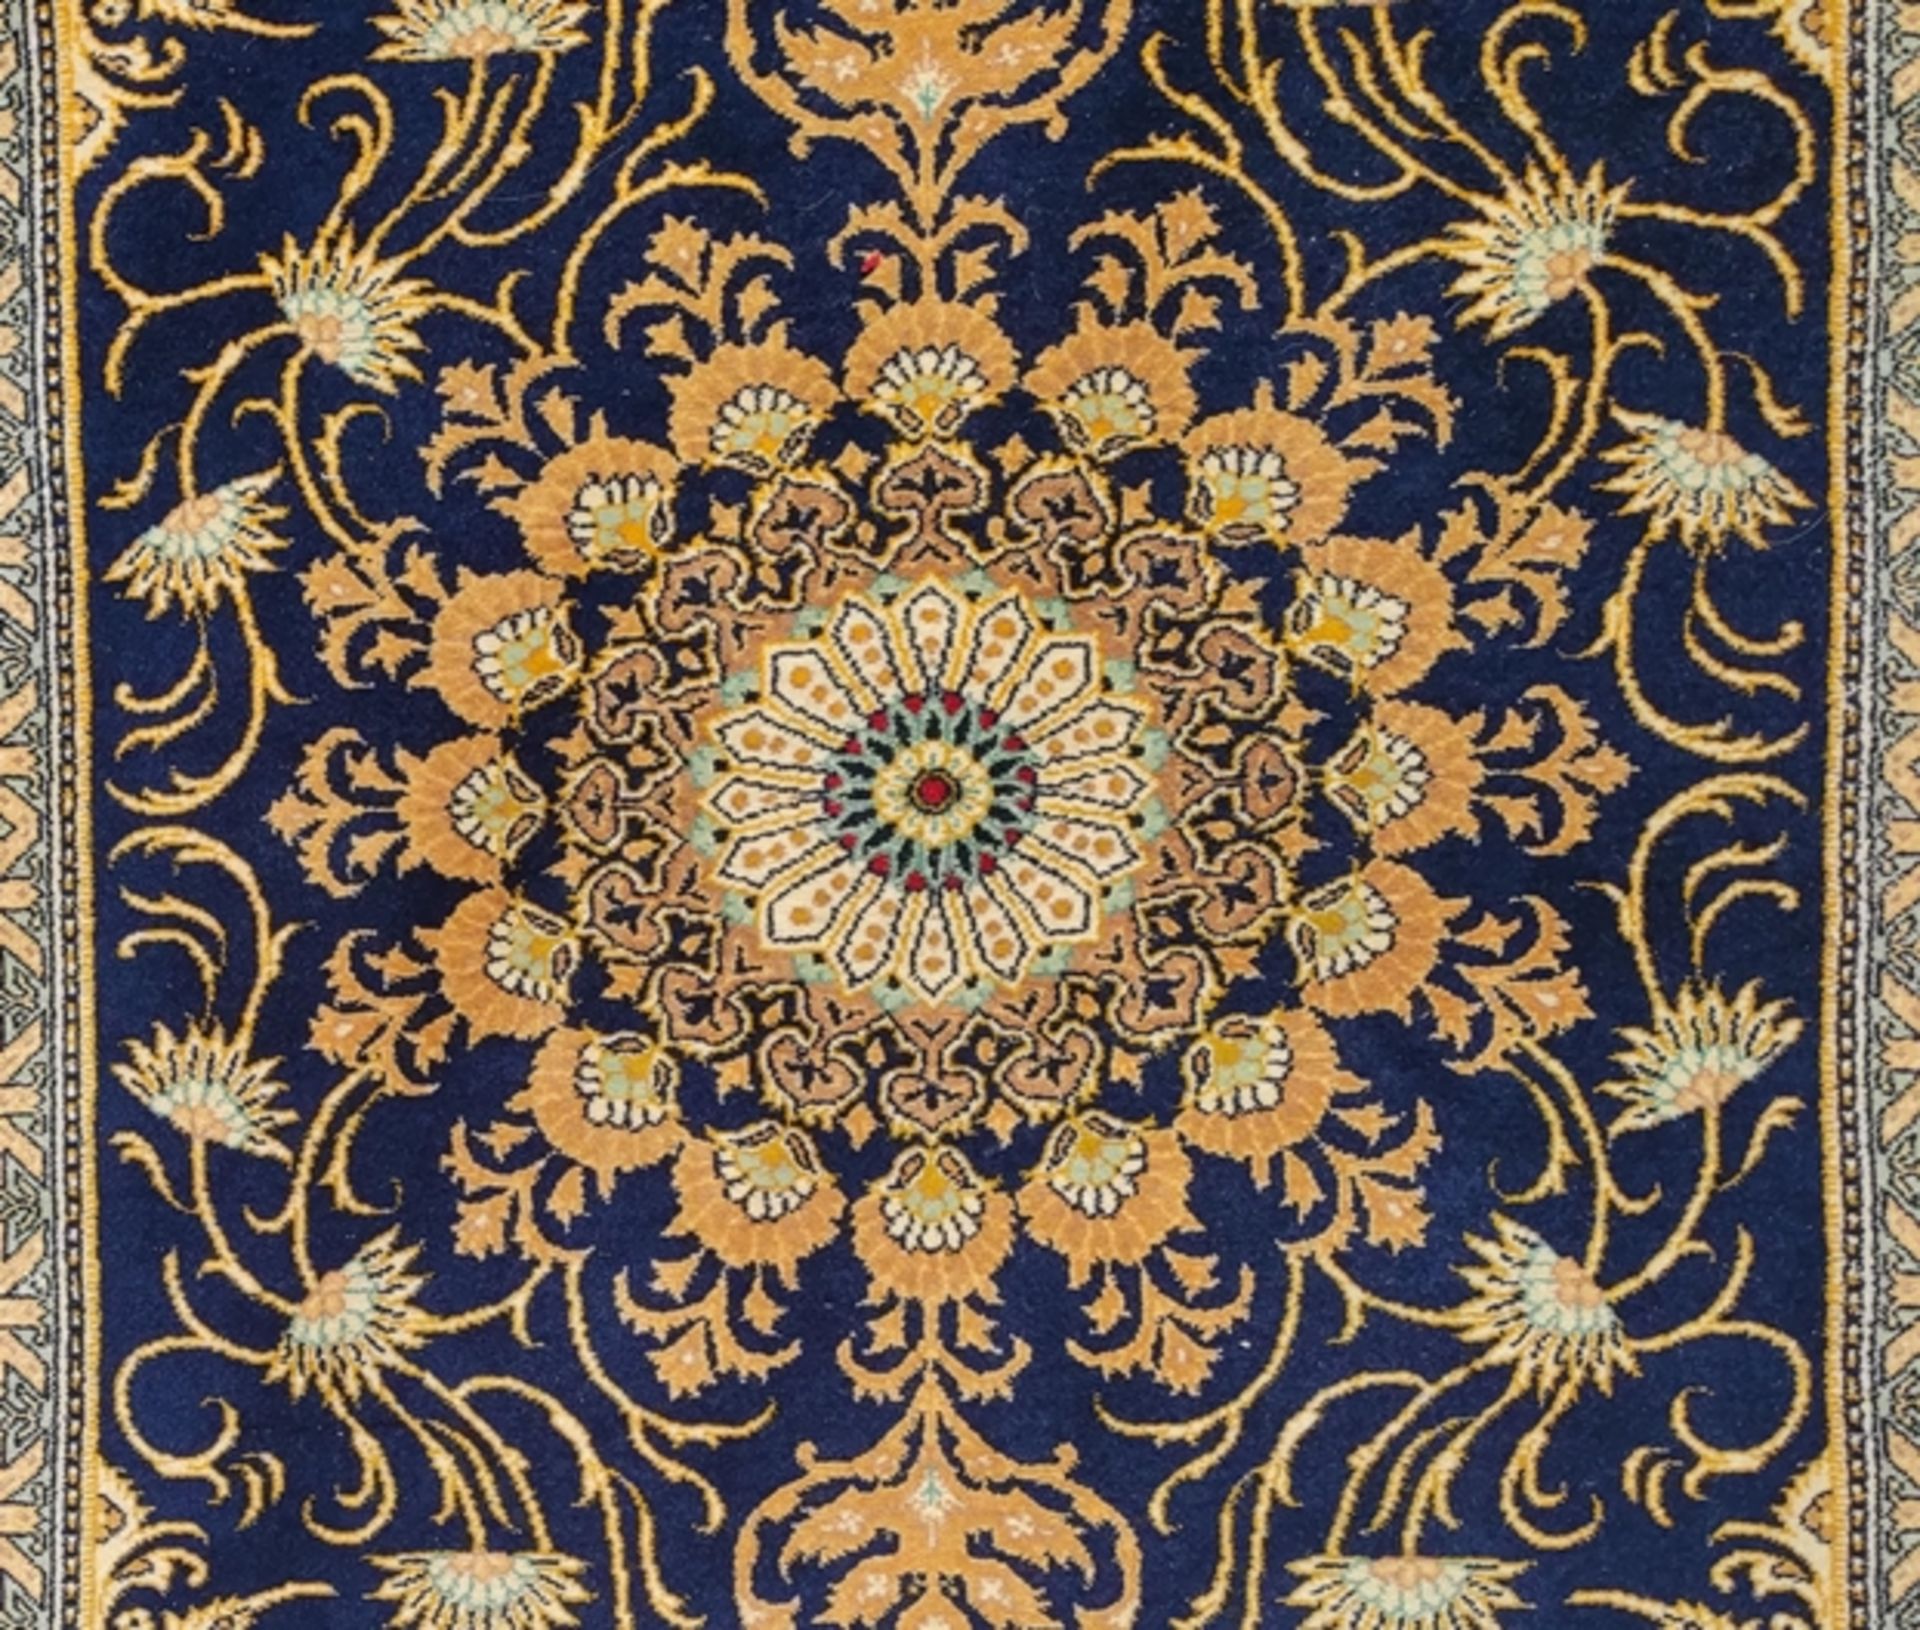 Rug Kerman, blue pattern, 158x112,5cm - Image 2 of 3